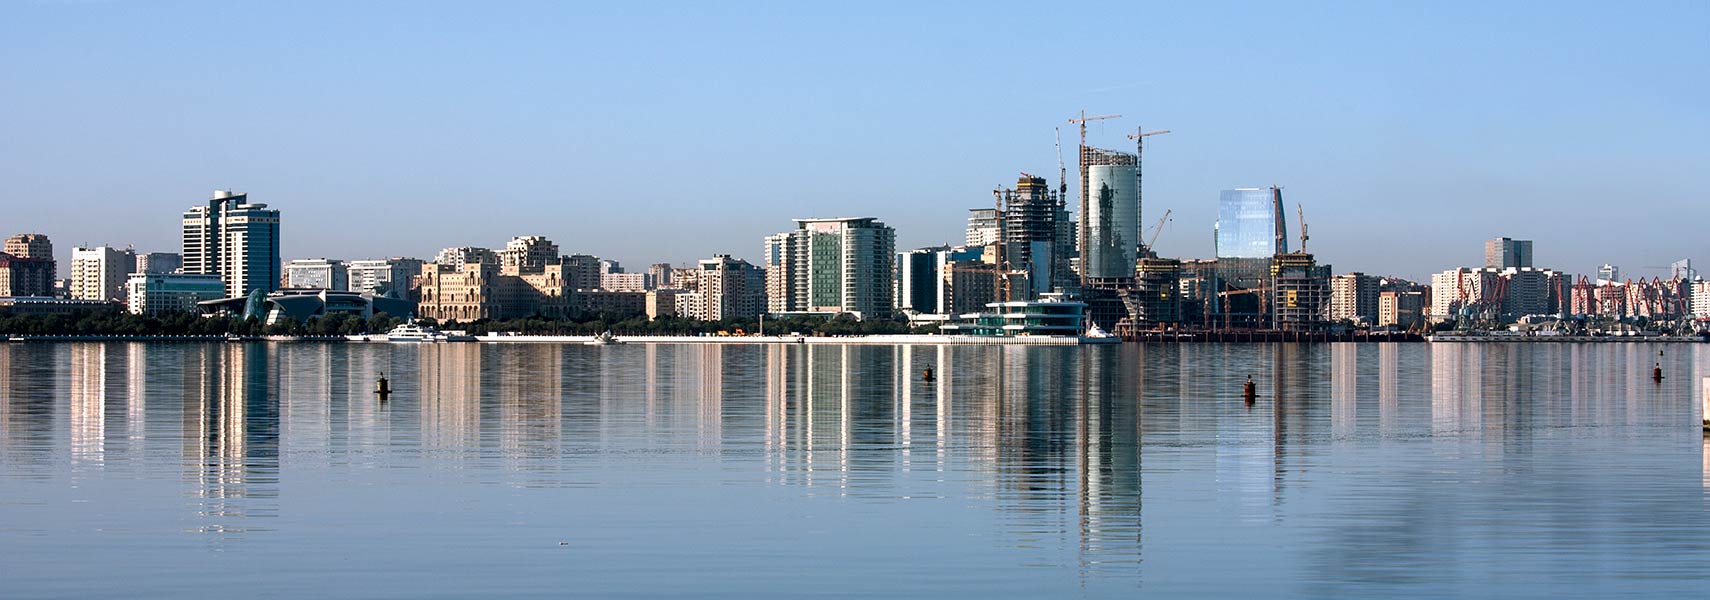 Skyline of the capital Baku at Baku bay, Azerbaijan